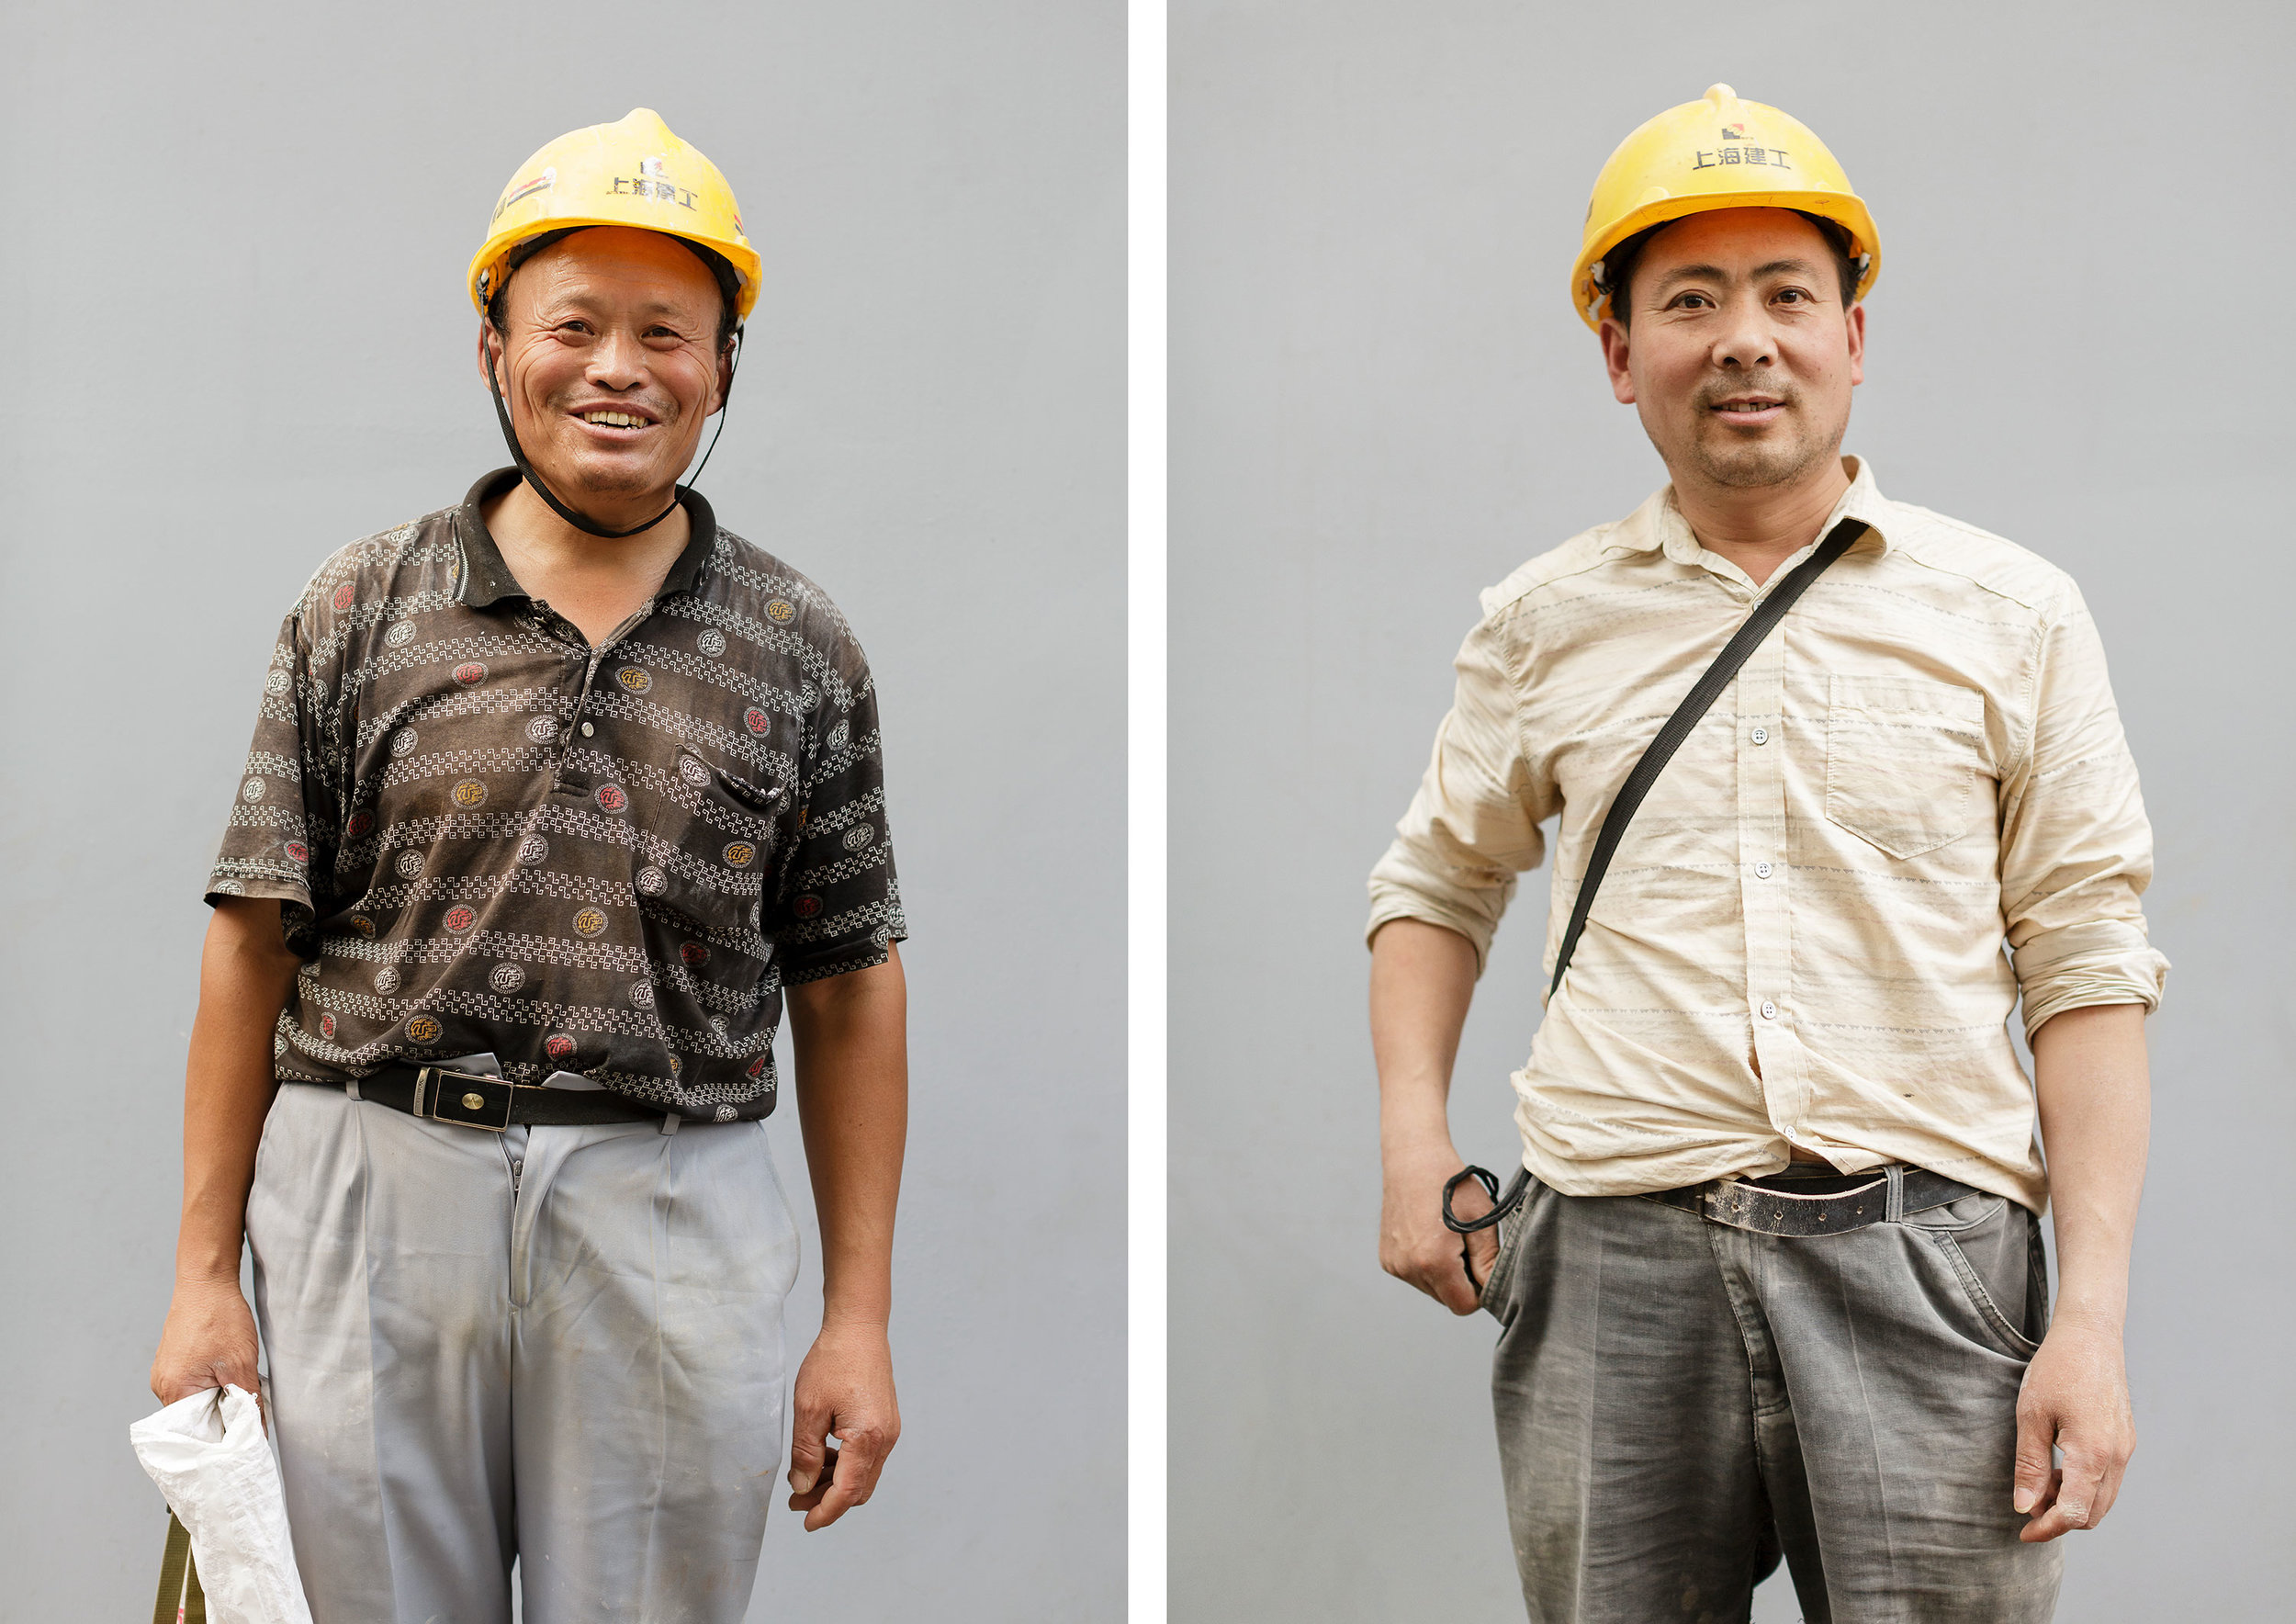 Shanghai_Tower-workers-and-building25.jpg